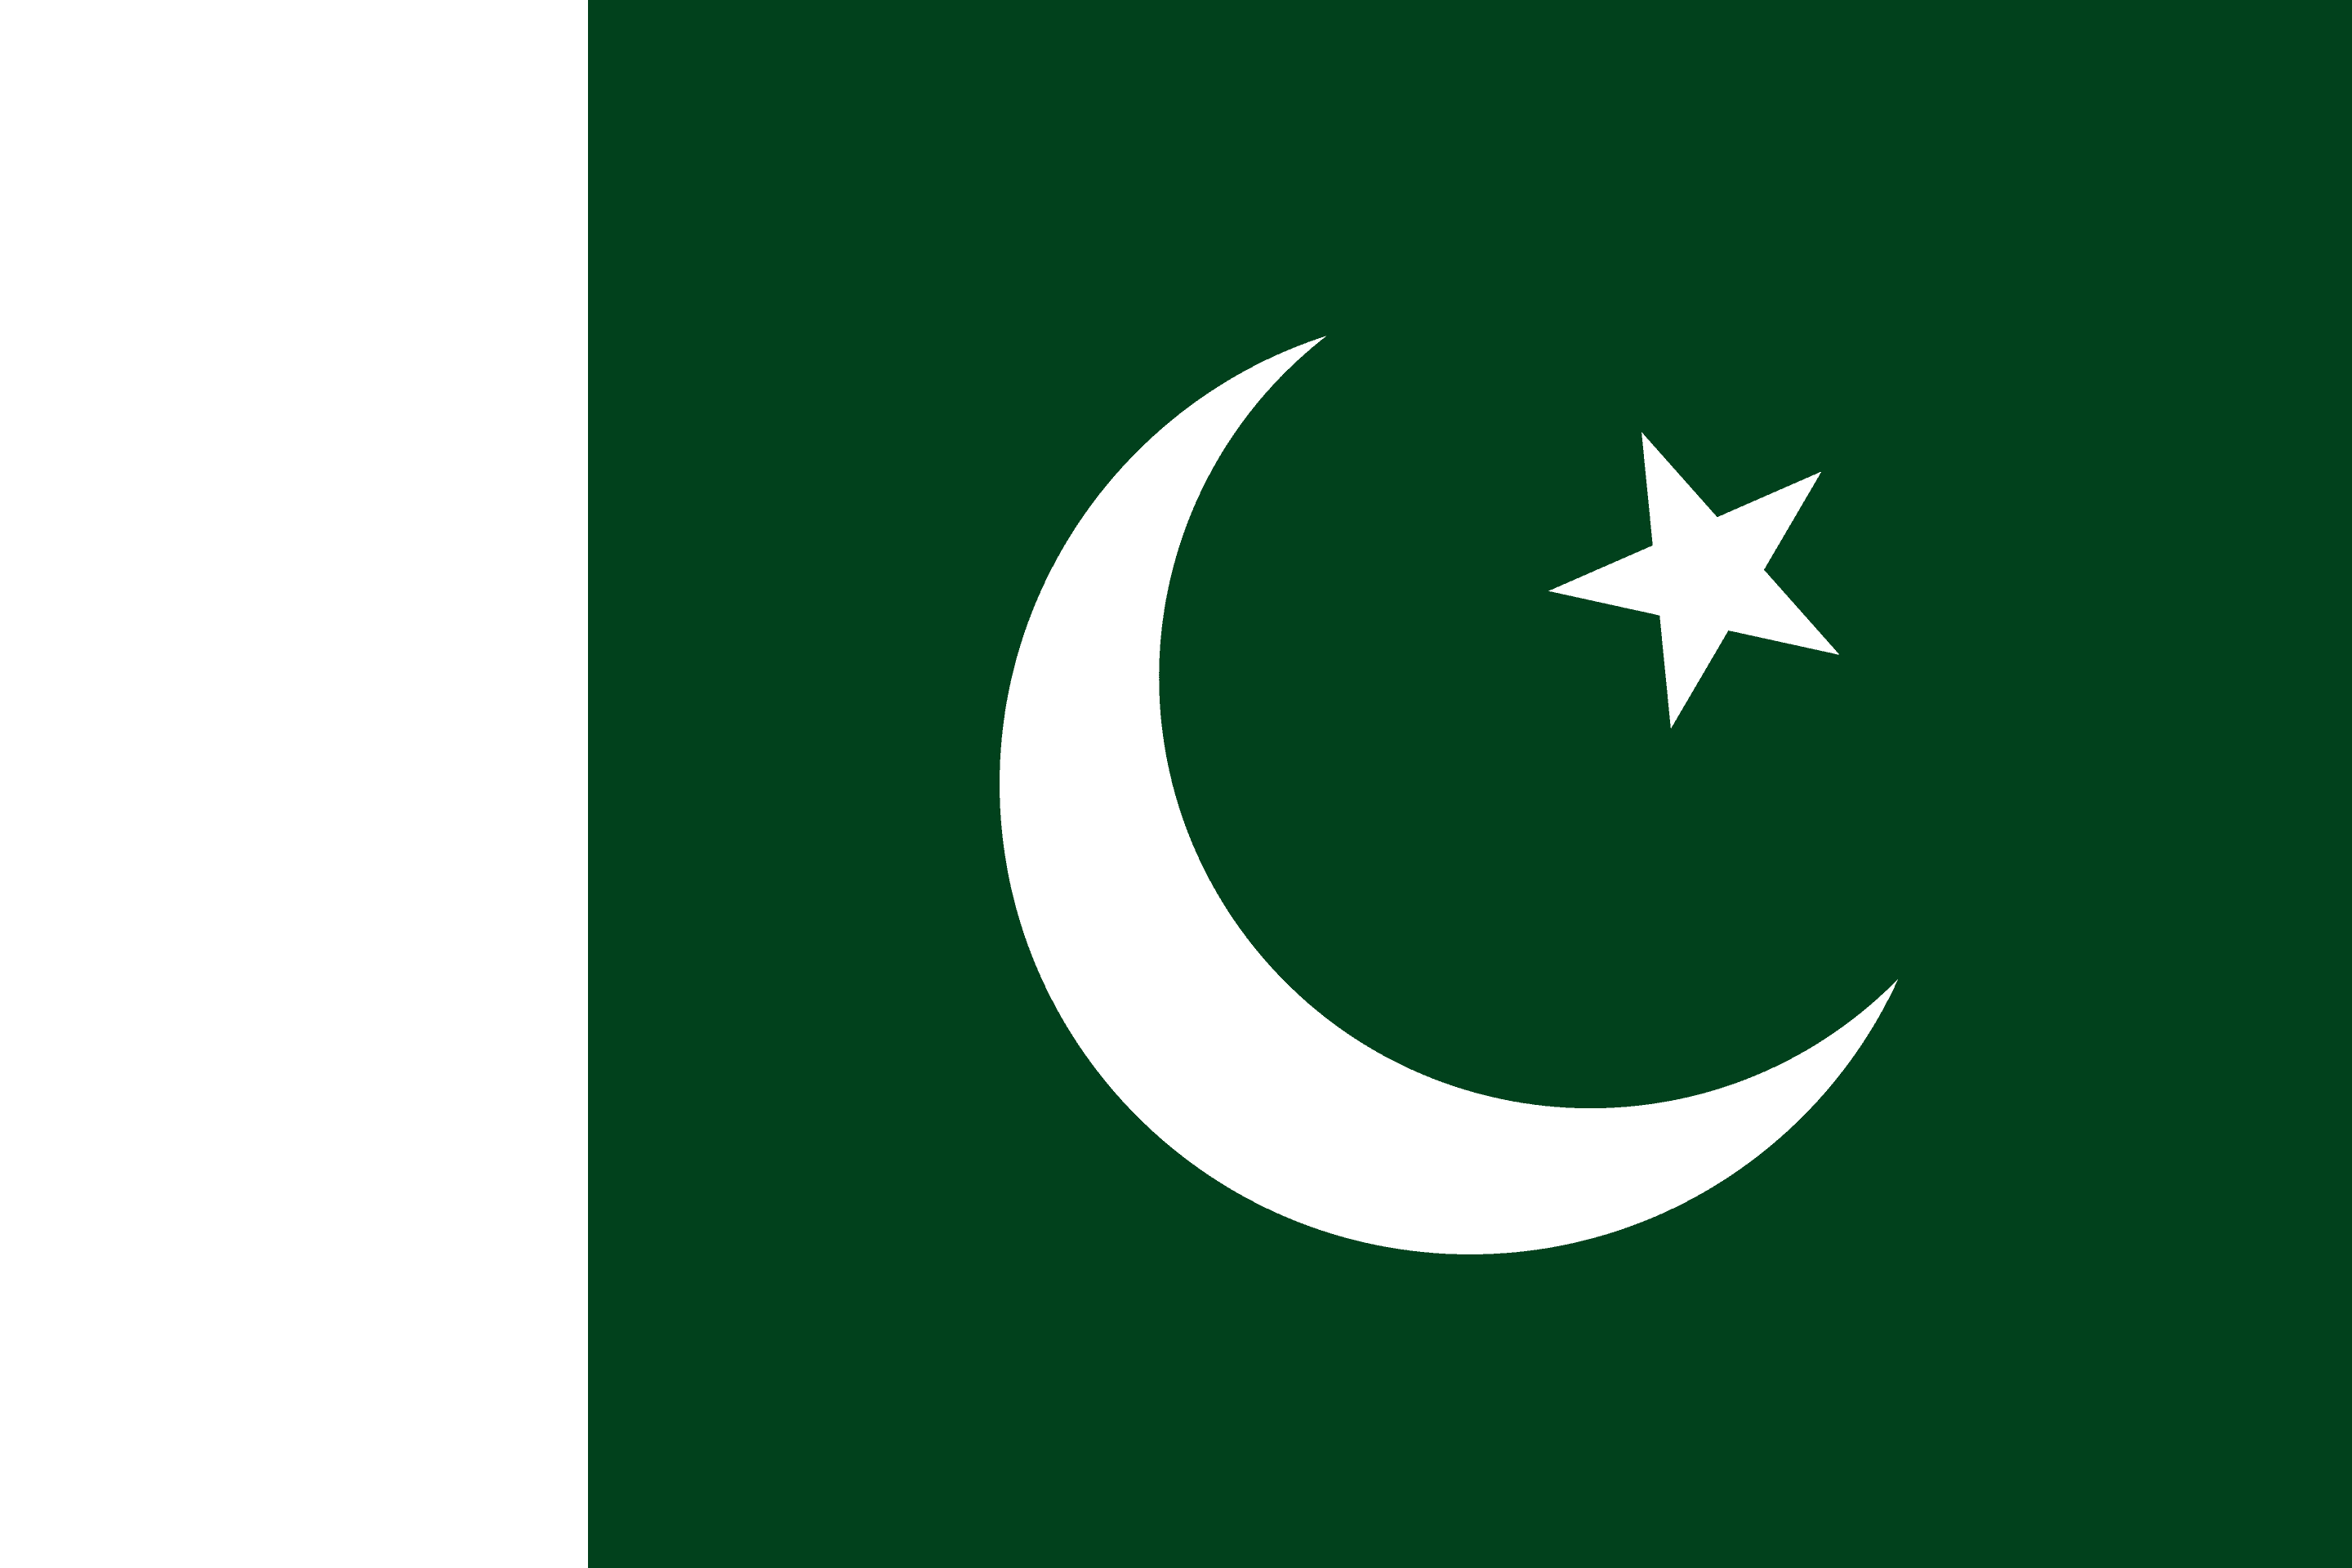 Drone Laws in Pakistan